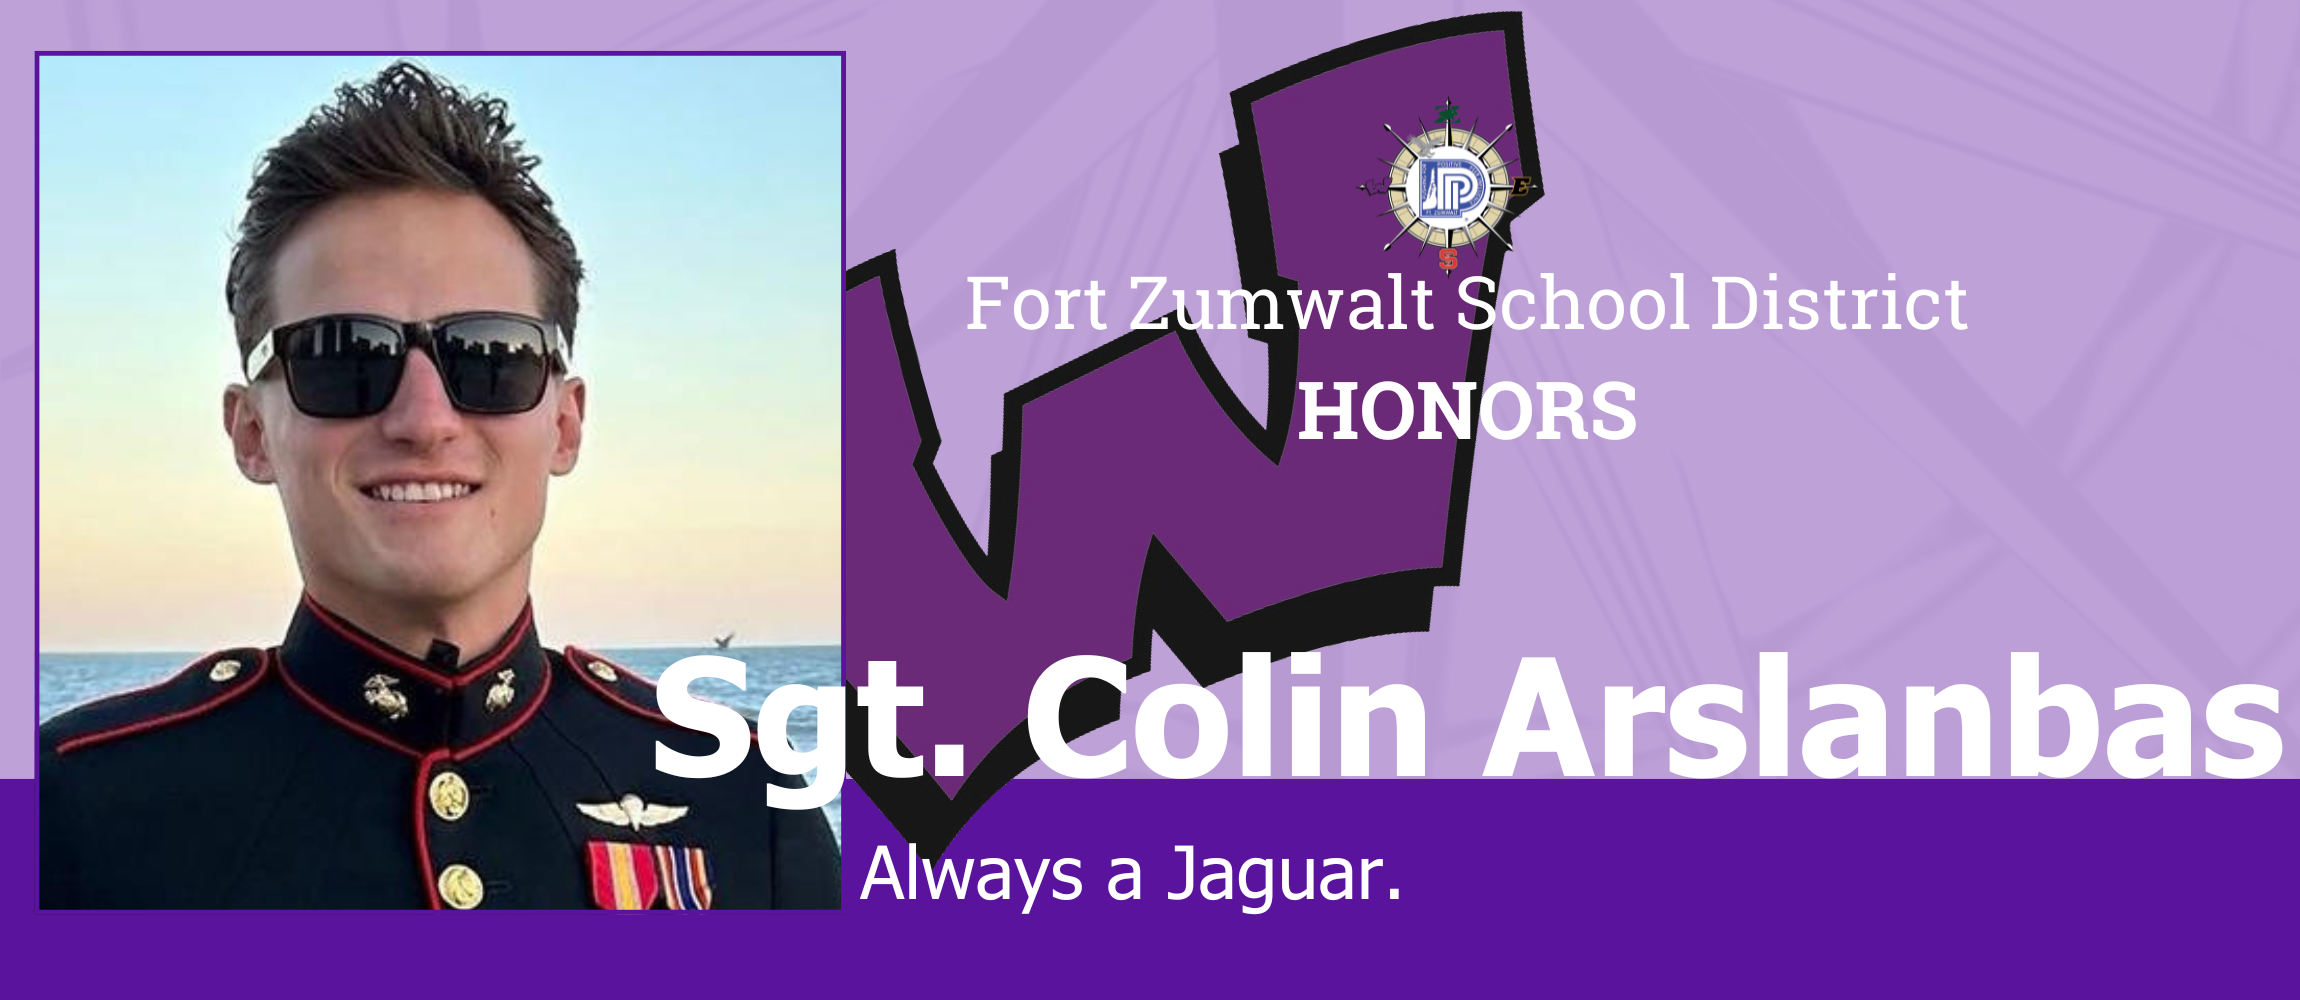 Fort Zumwalt School District honors Sgt. Colin Arslanbas, USMC, FZW Class of 2019